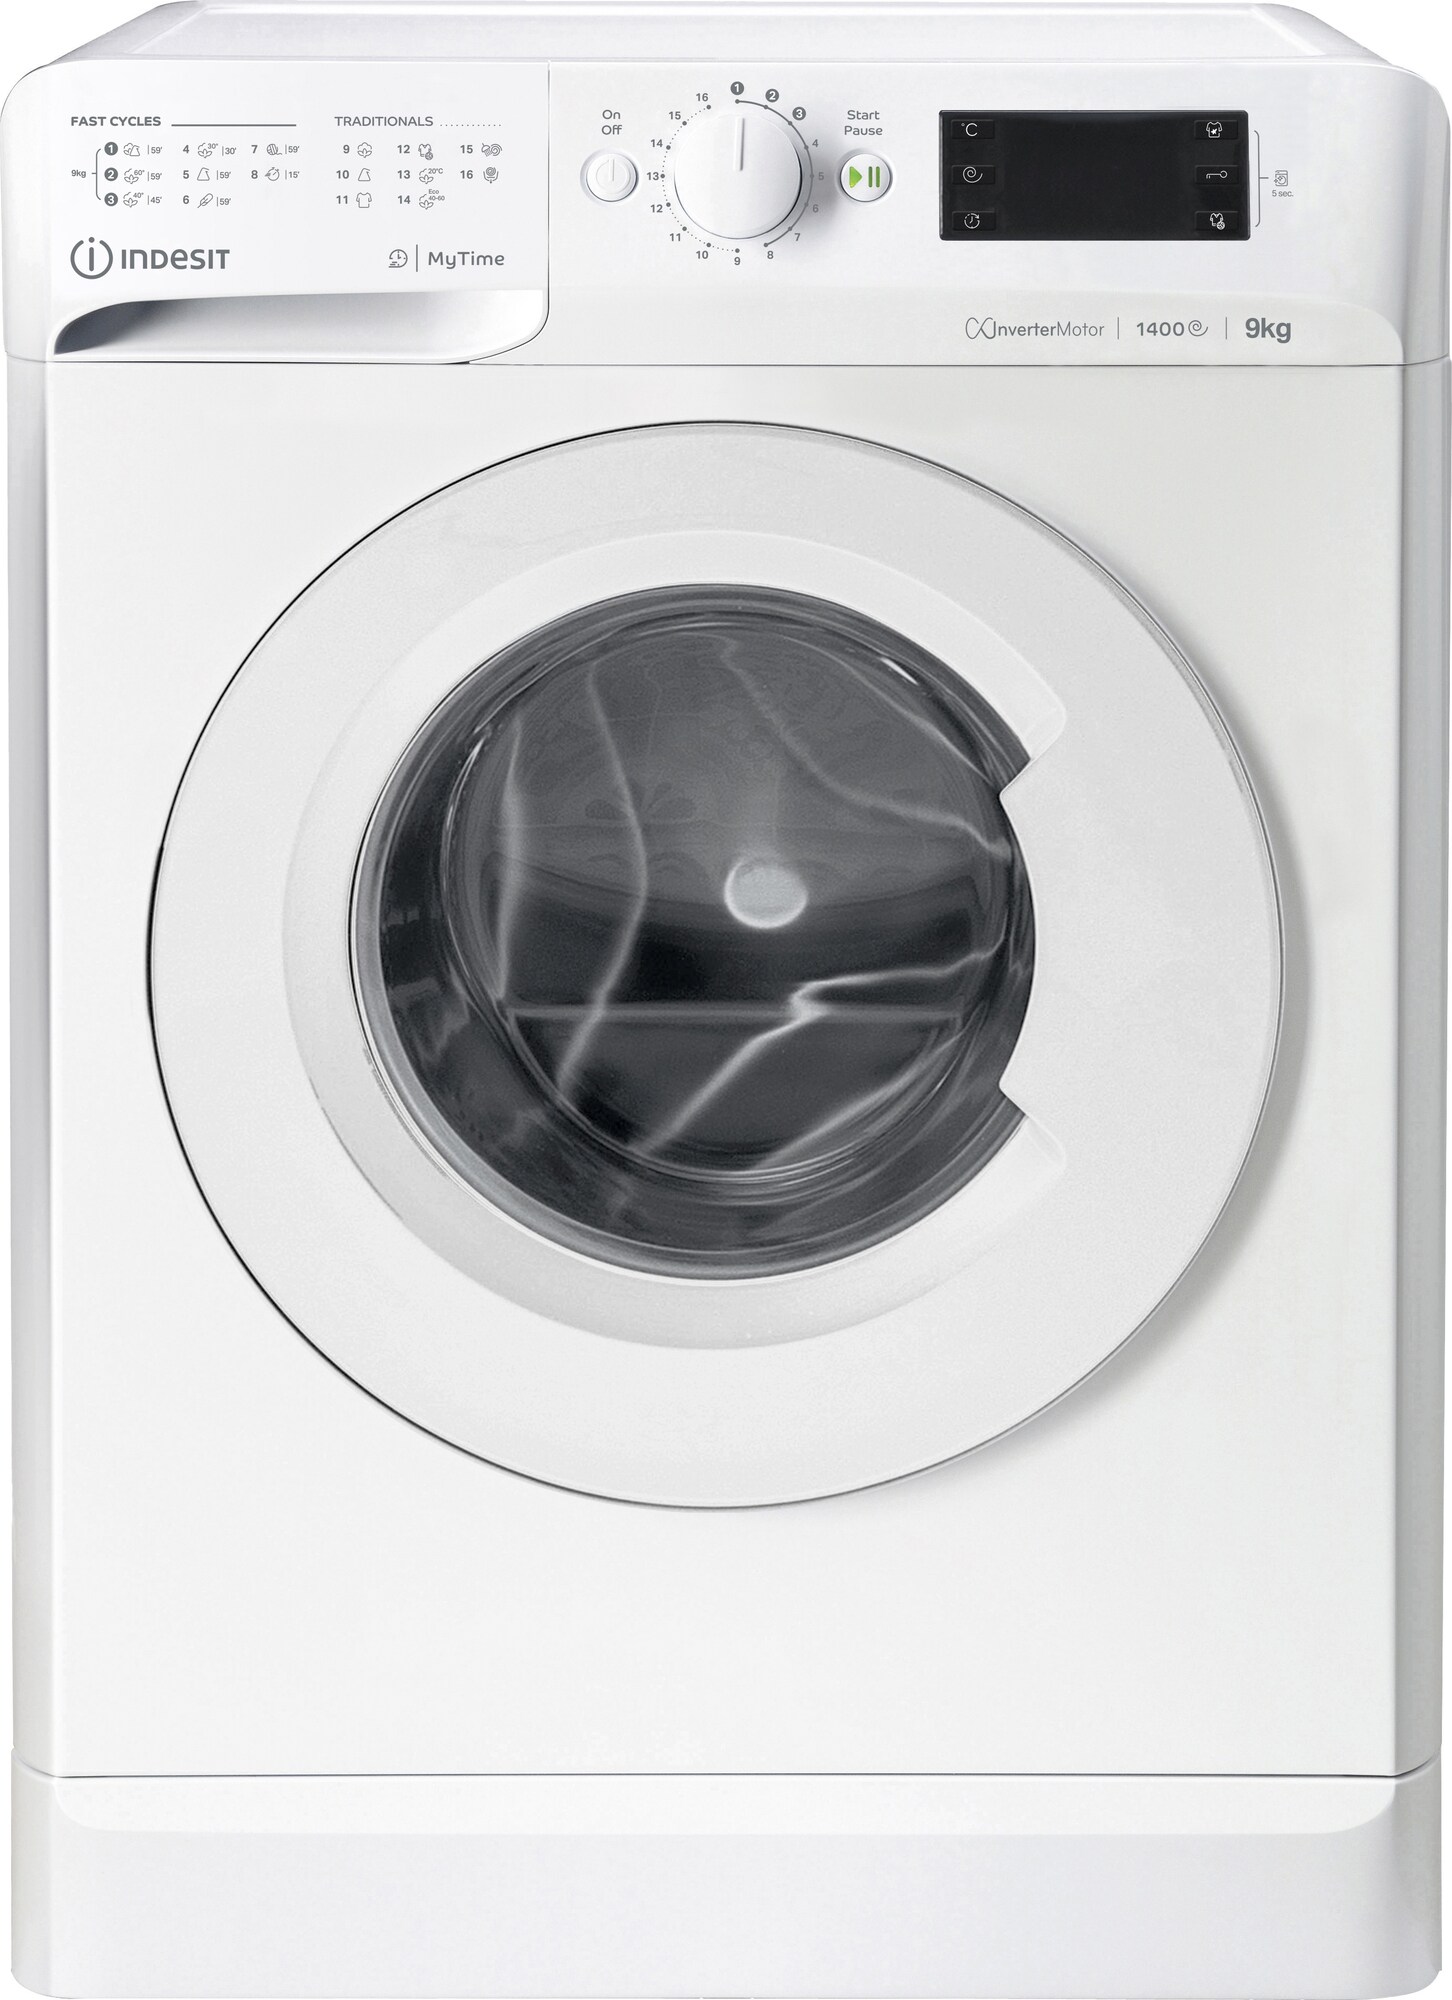 Indesit Mytime vaskemaskine MTWE91483WEU (hvid) | Elgiganten